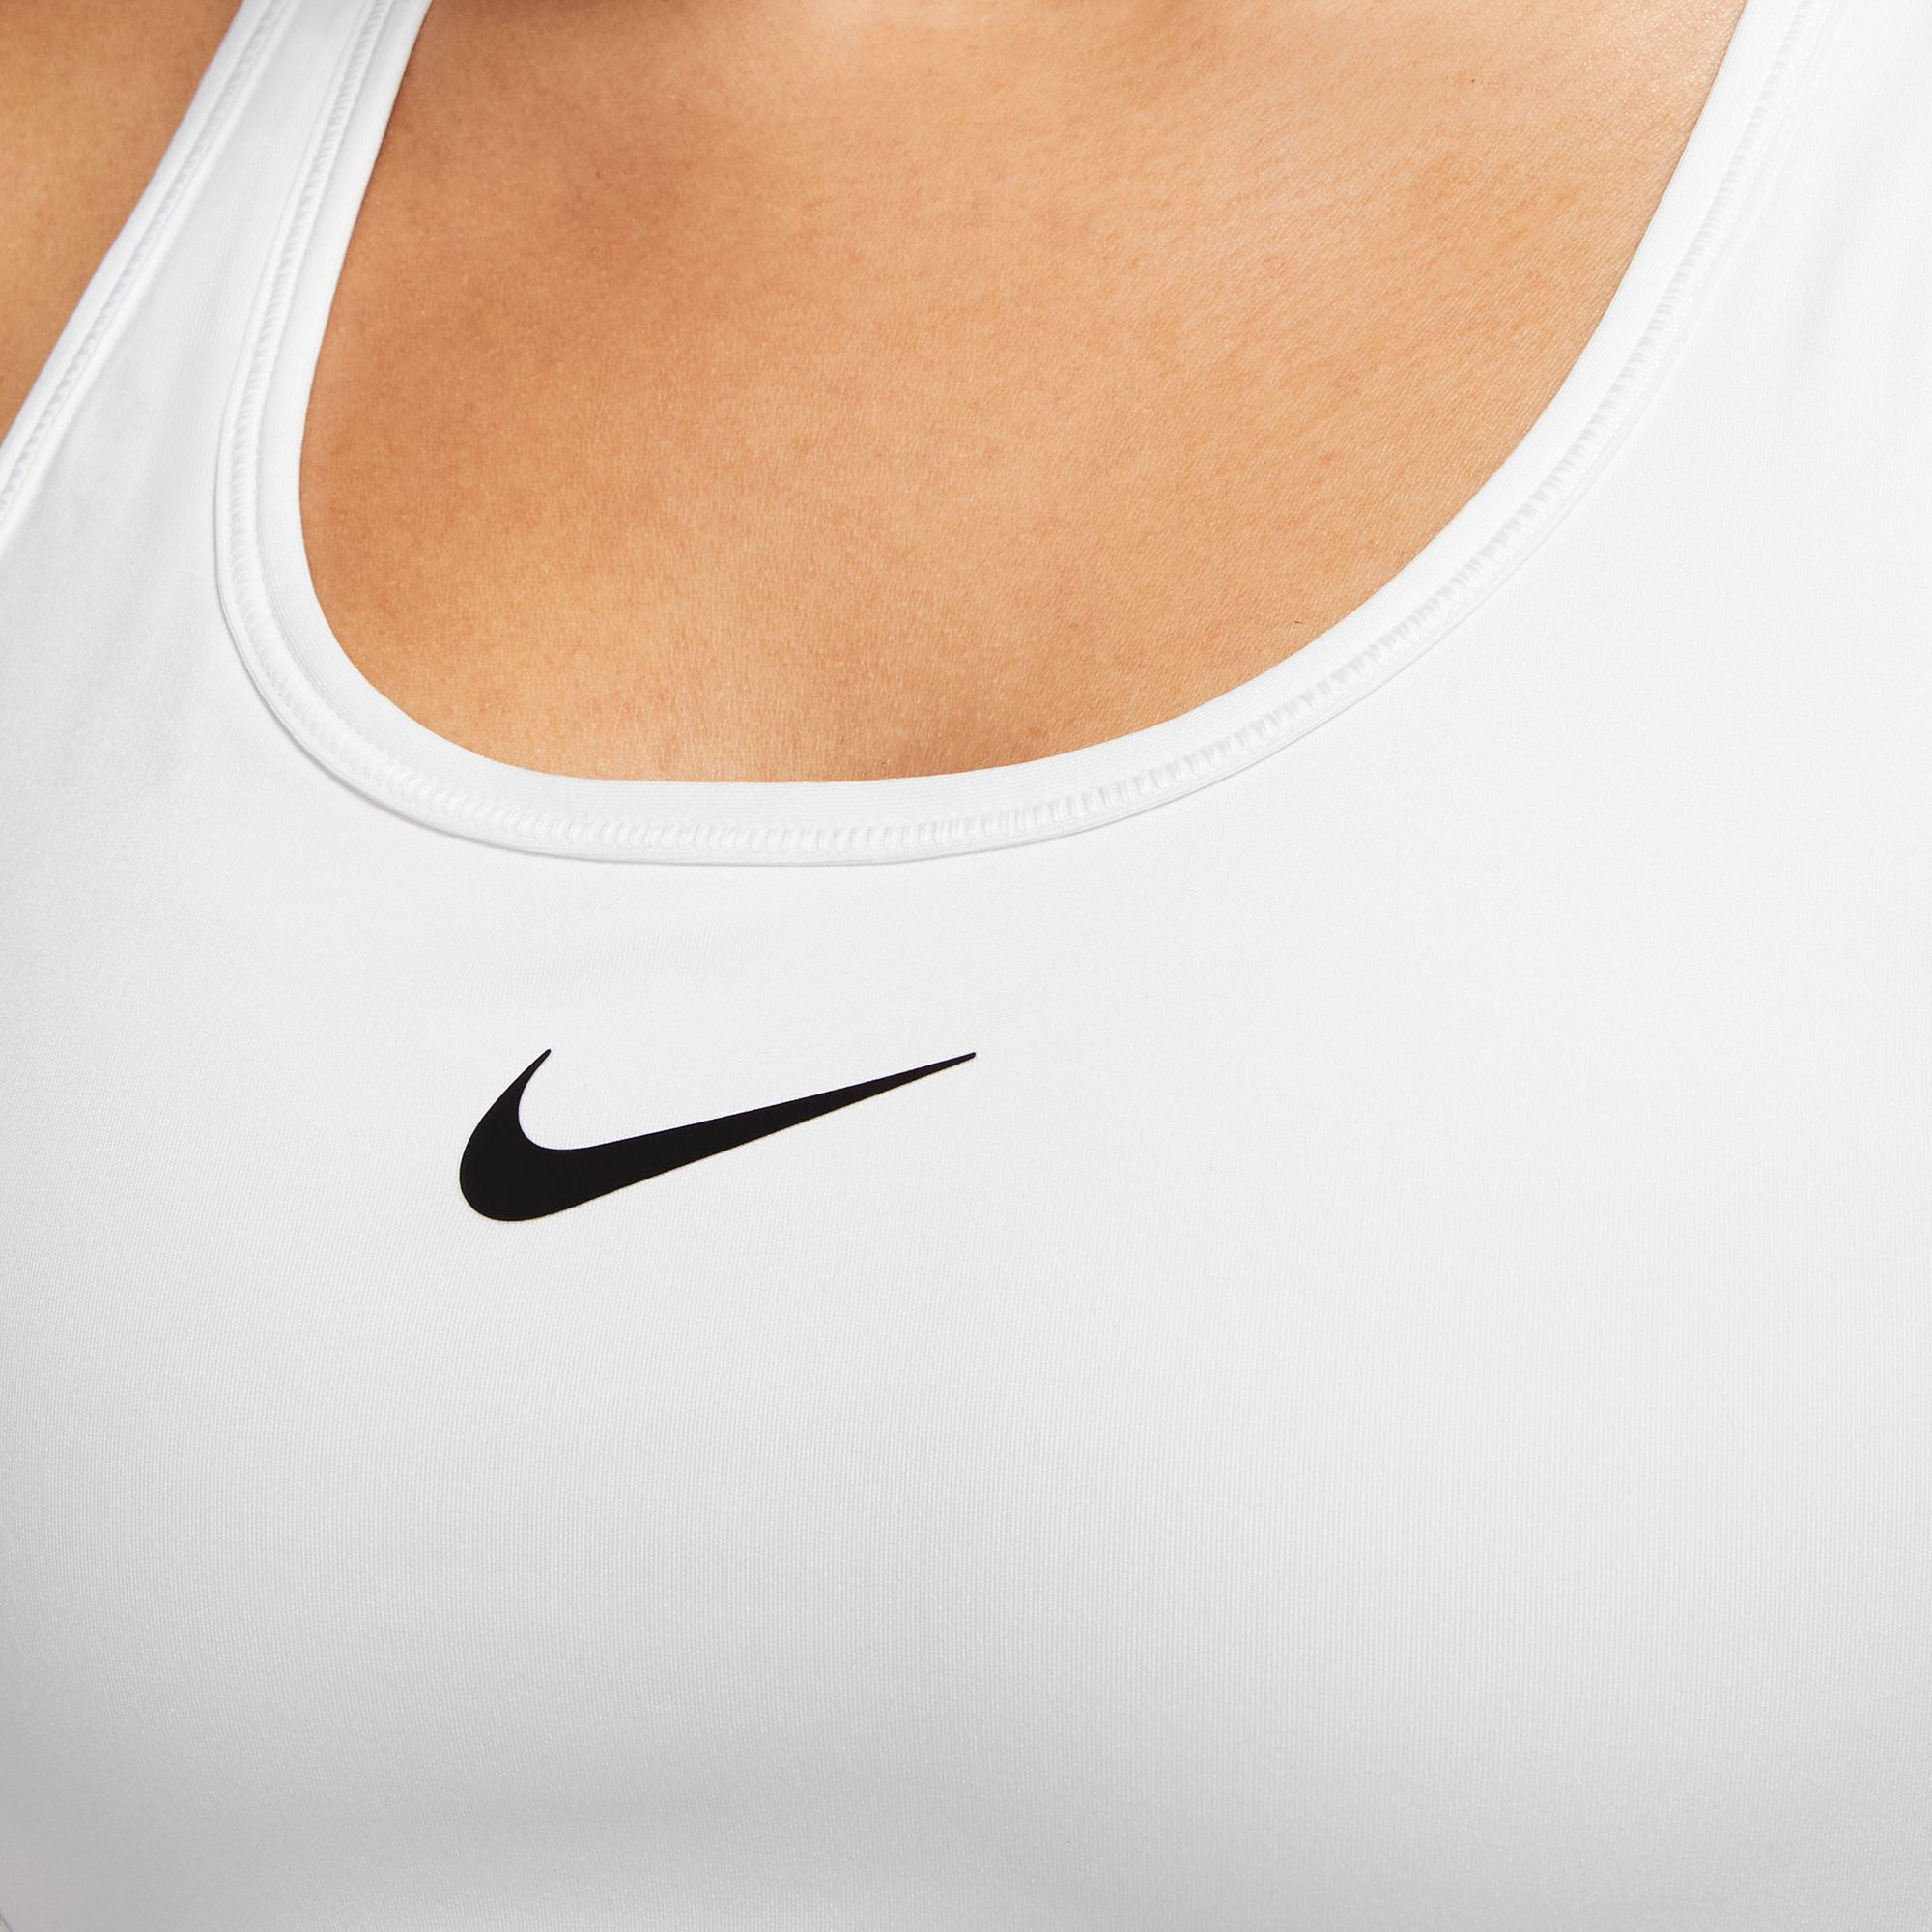 Nike Dri-Fit Women’s Tennis Tank Top Built In Bra Black/White Logo sz Medium